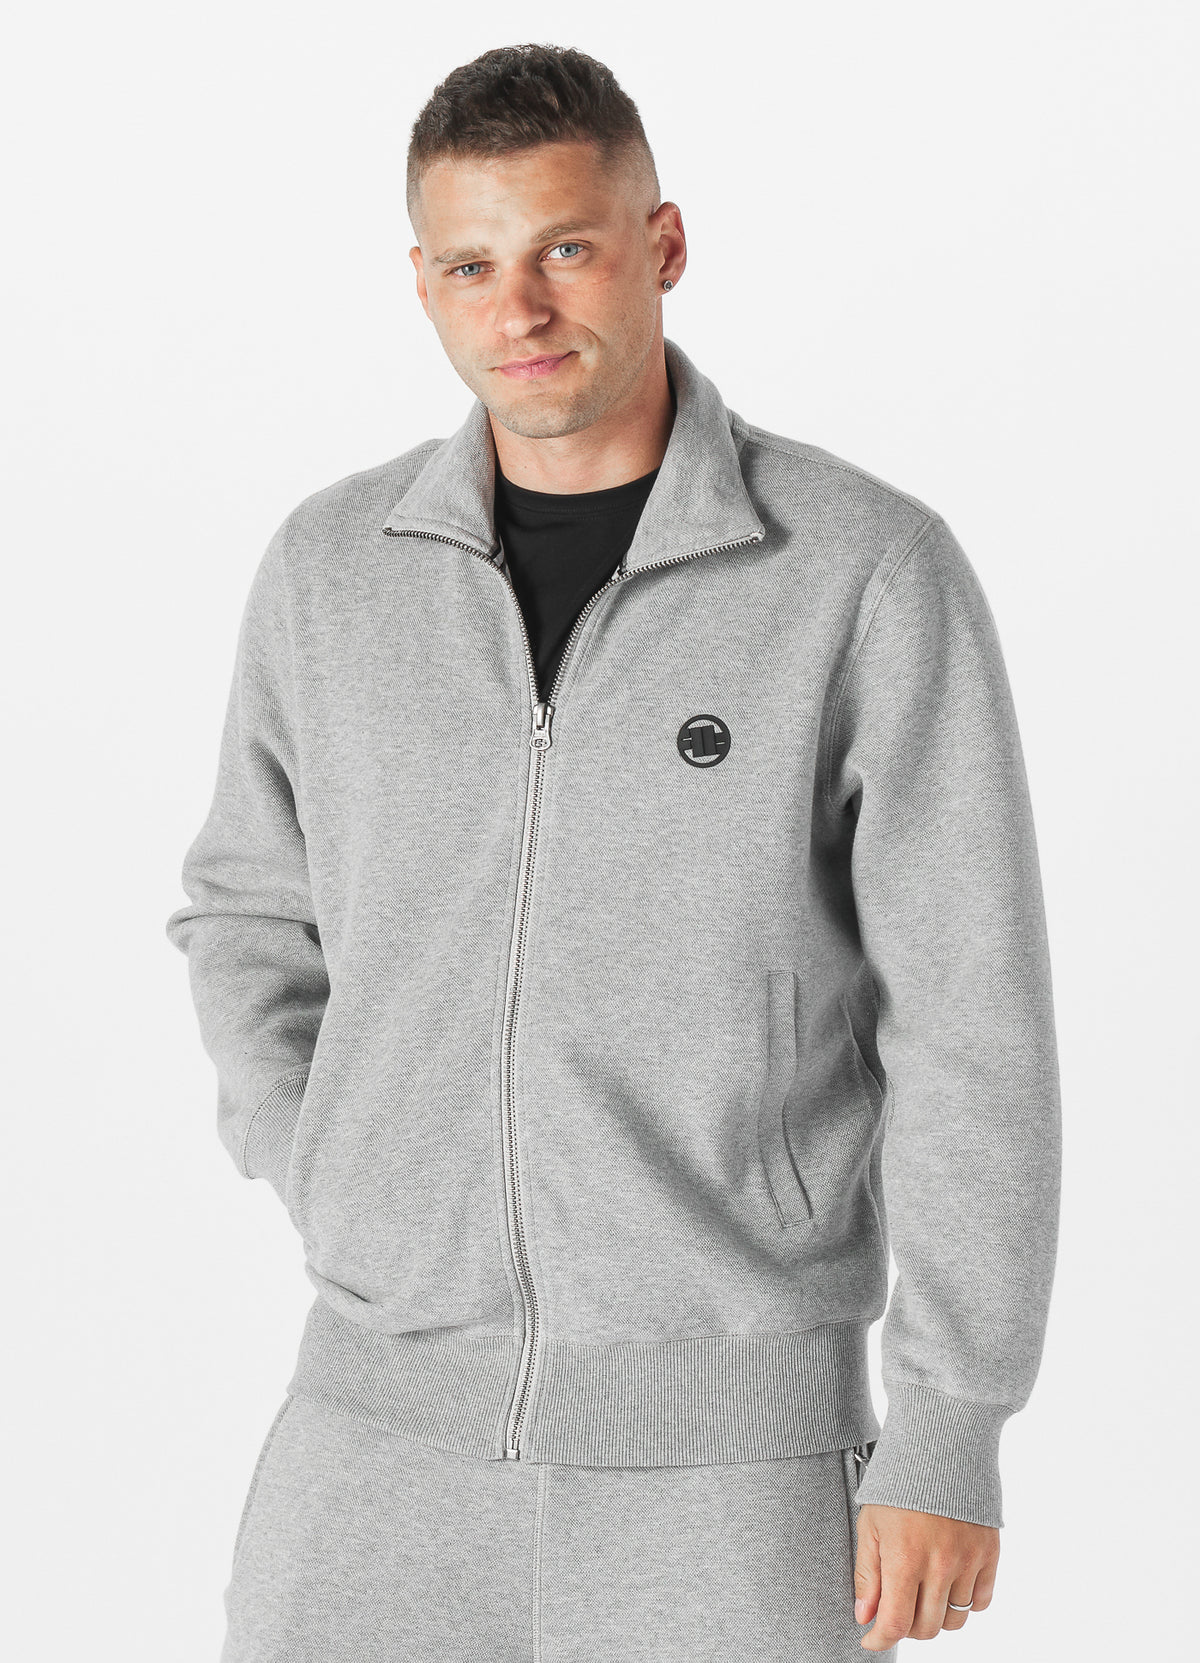 NEW LOGO Premium Pique Grey Sweatjacket.